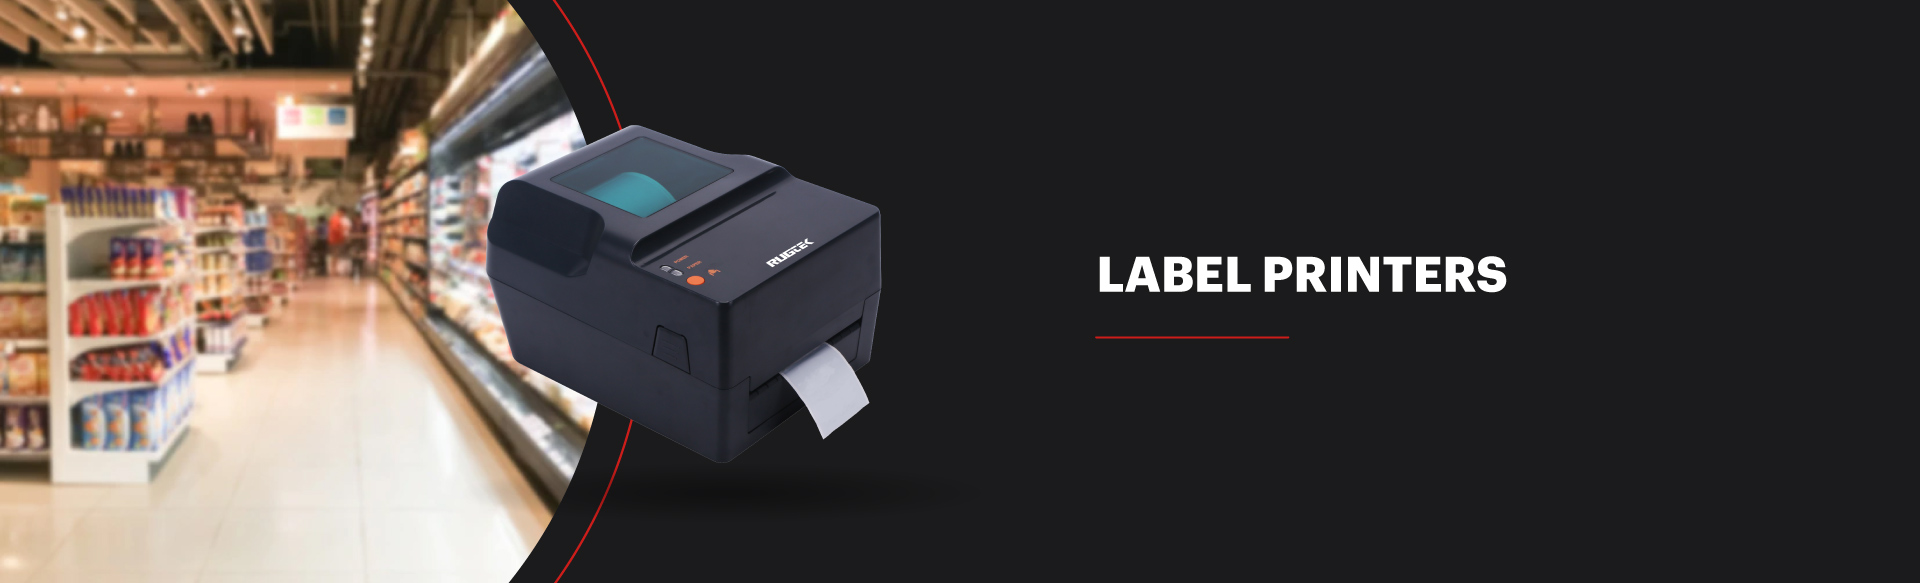 Label Printers | Portable Label Printer | Pos Machine | Rugtek